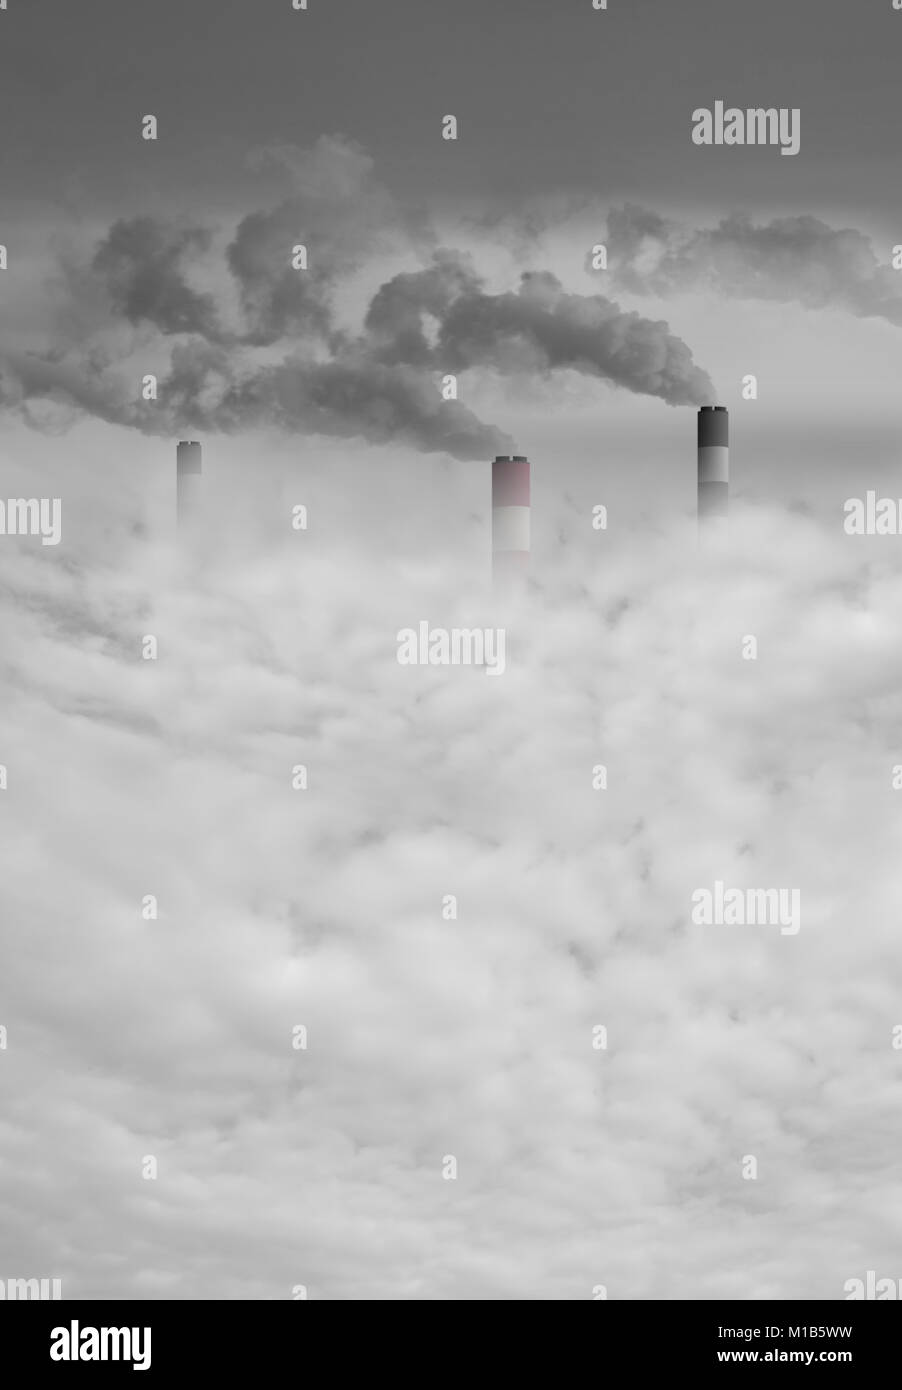 Big power station chimney with smoke above the city smog Stock Photo